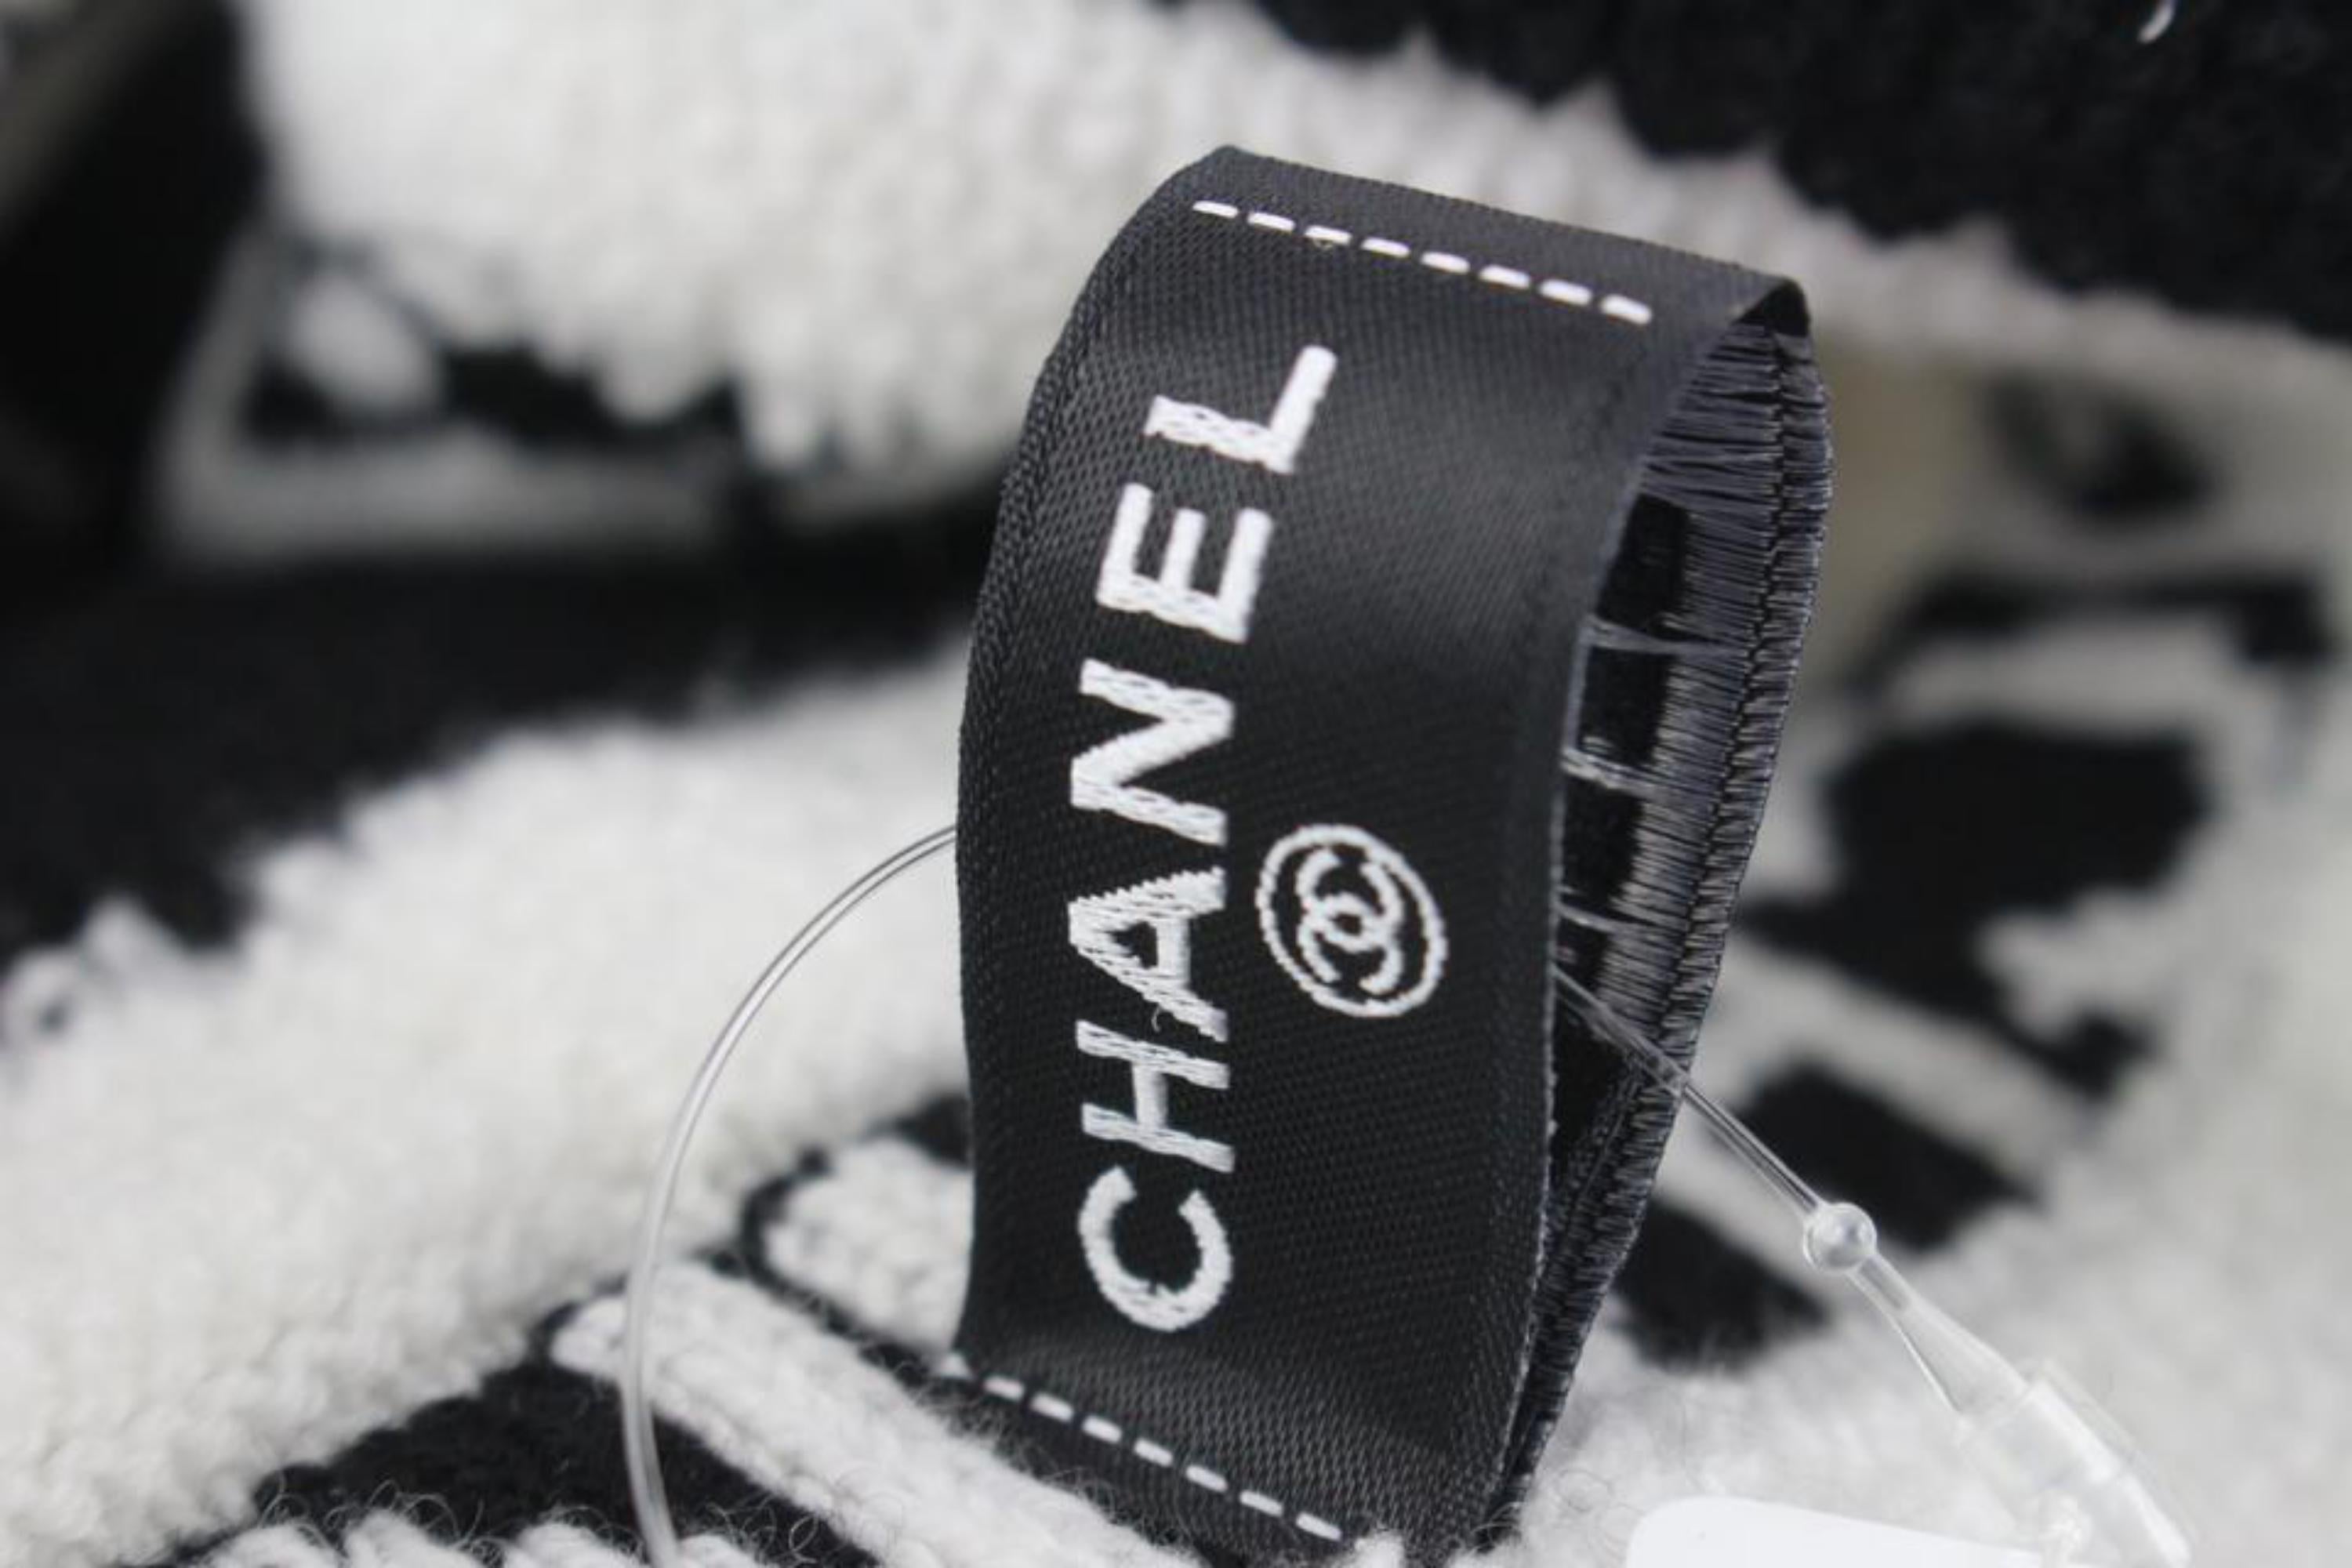 Chanel Black x White Cashmere Pom Pom Beanie Skull Cap Ski Hat 1213c5 3